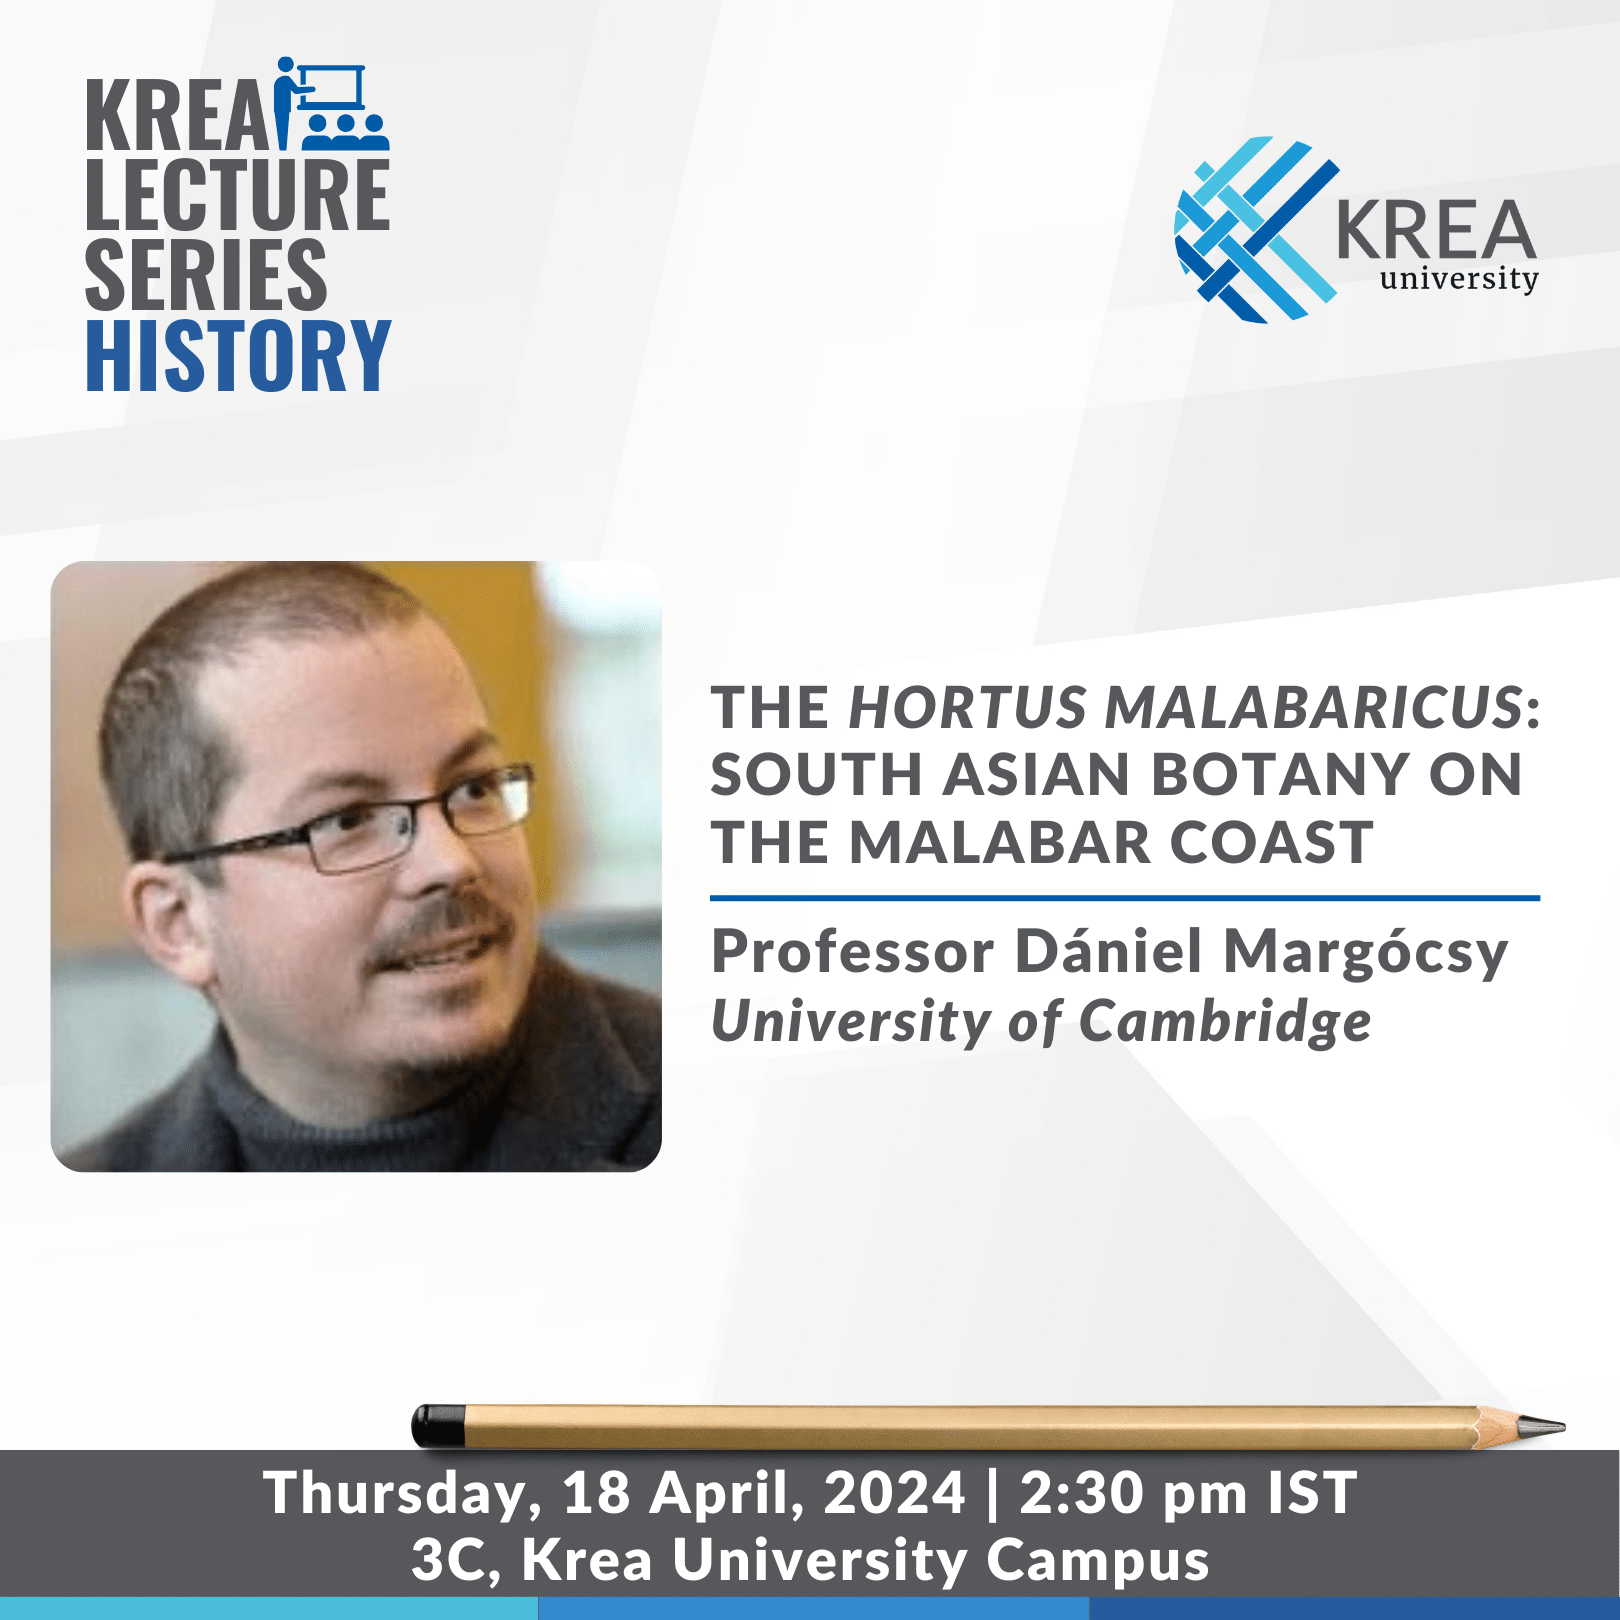 A Talk on The Hortus malabaricus: South Asian Botany on the Malabar Coast by Professor Dániel Margócsy